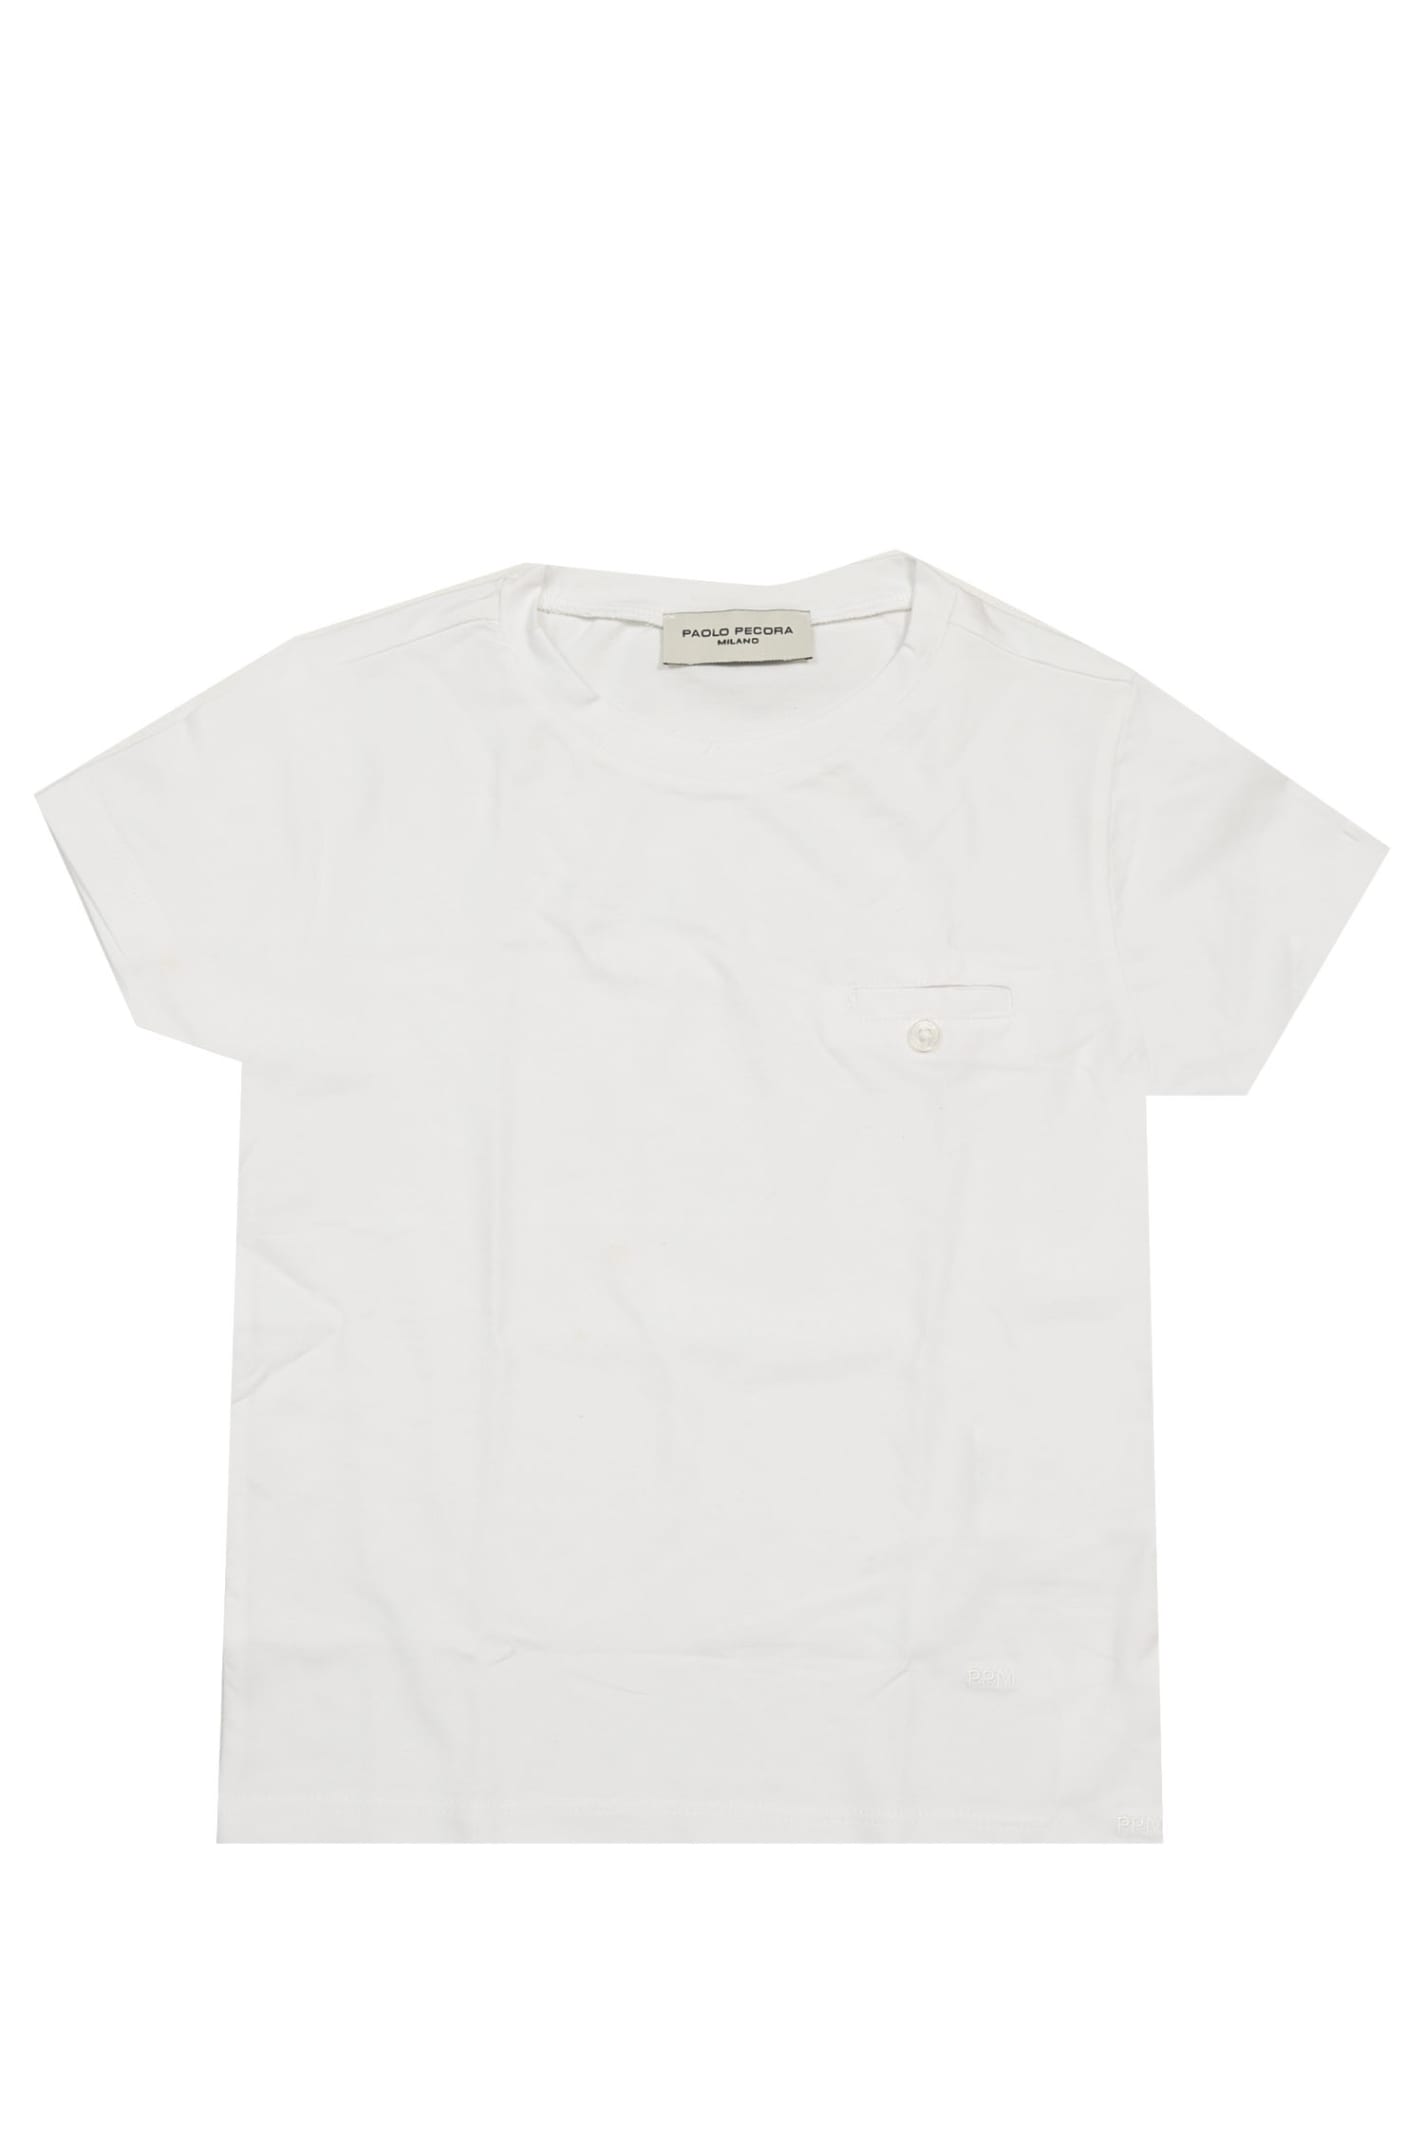 Paolo Pecora Kids' Cotton T-shirt In White